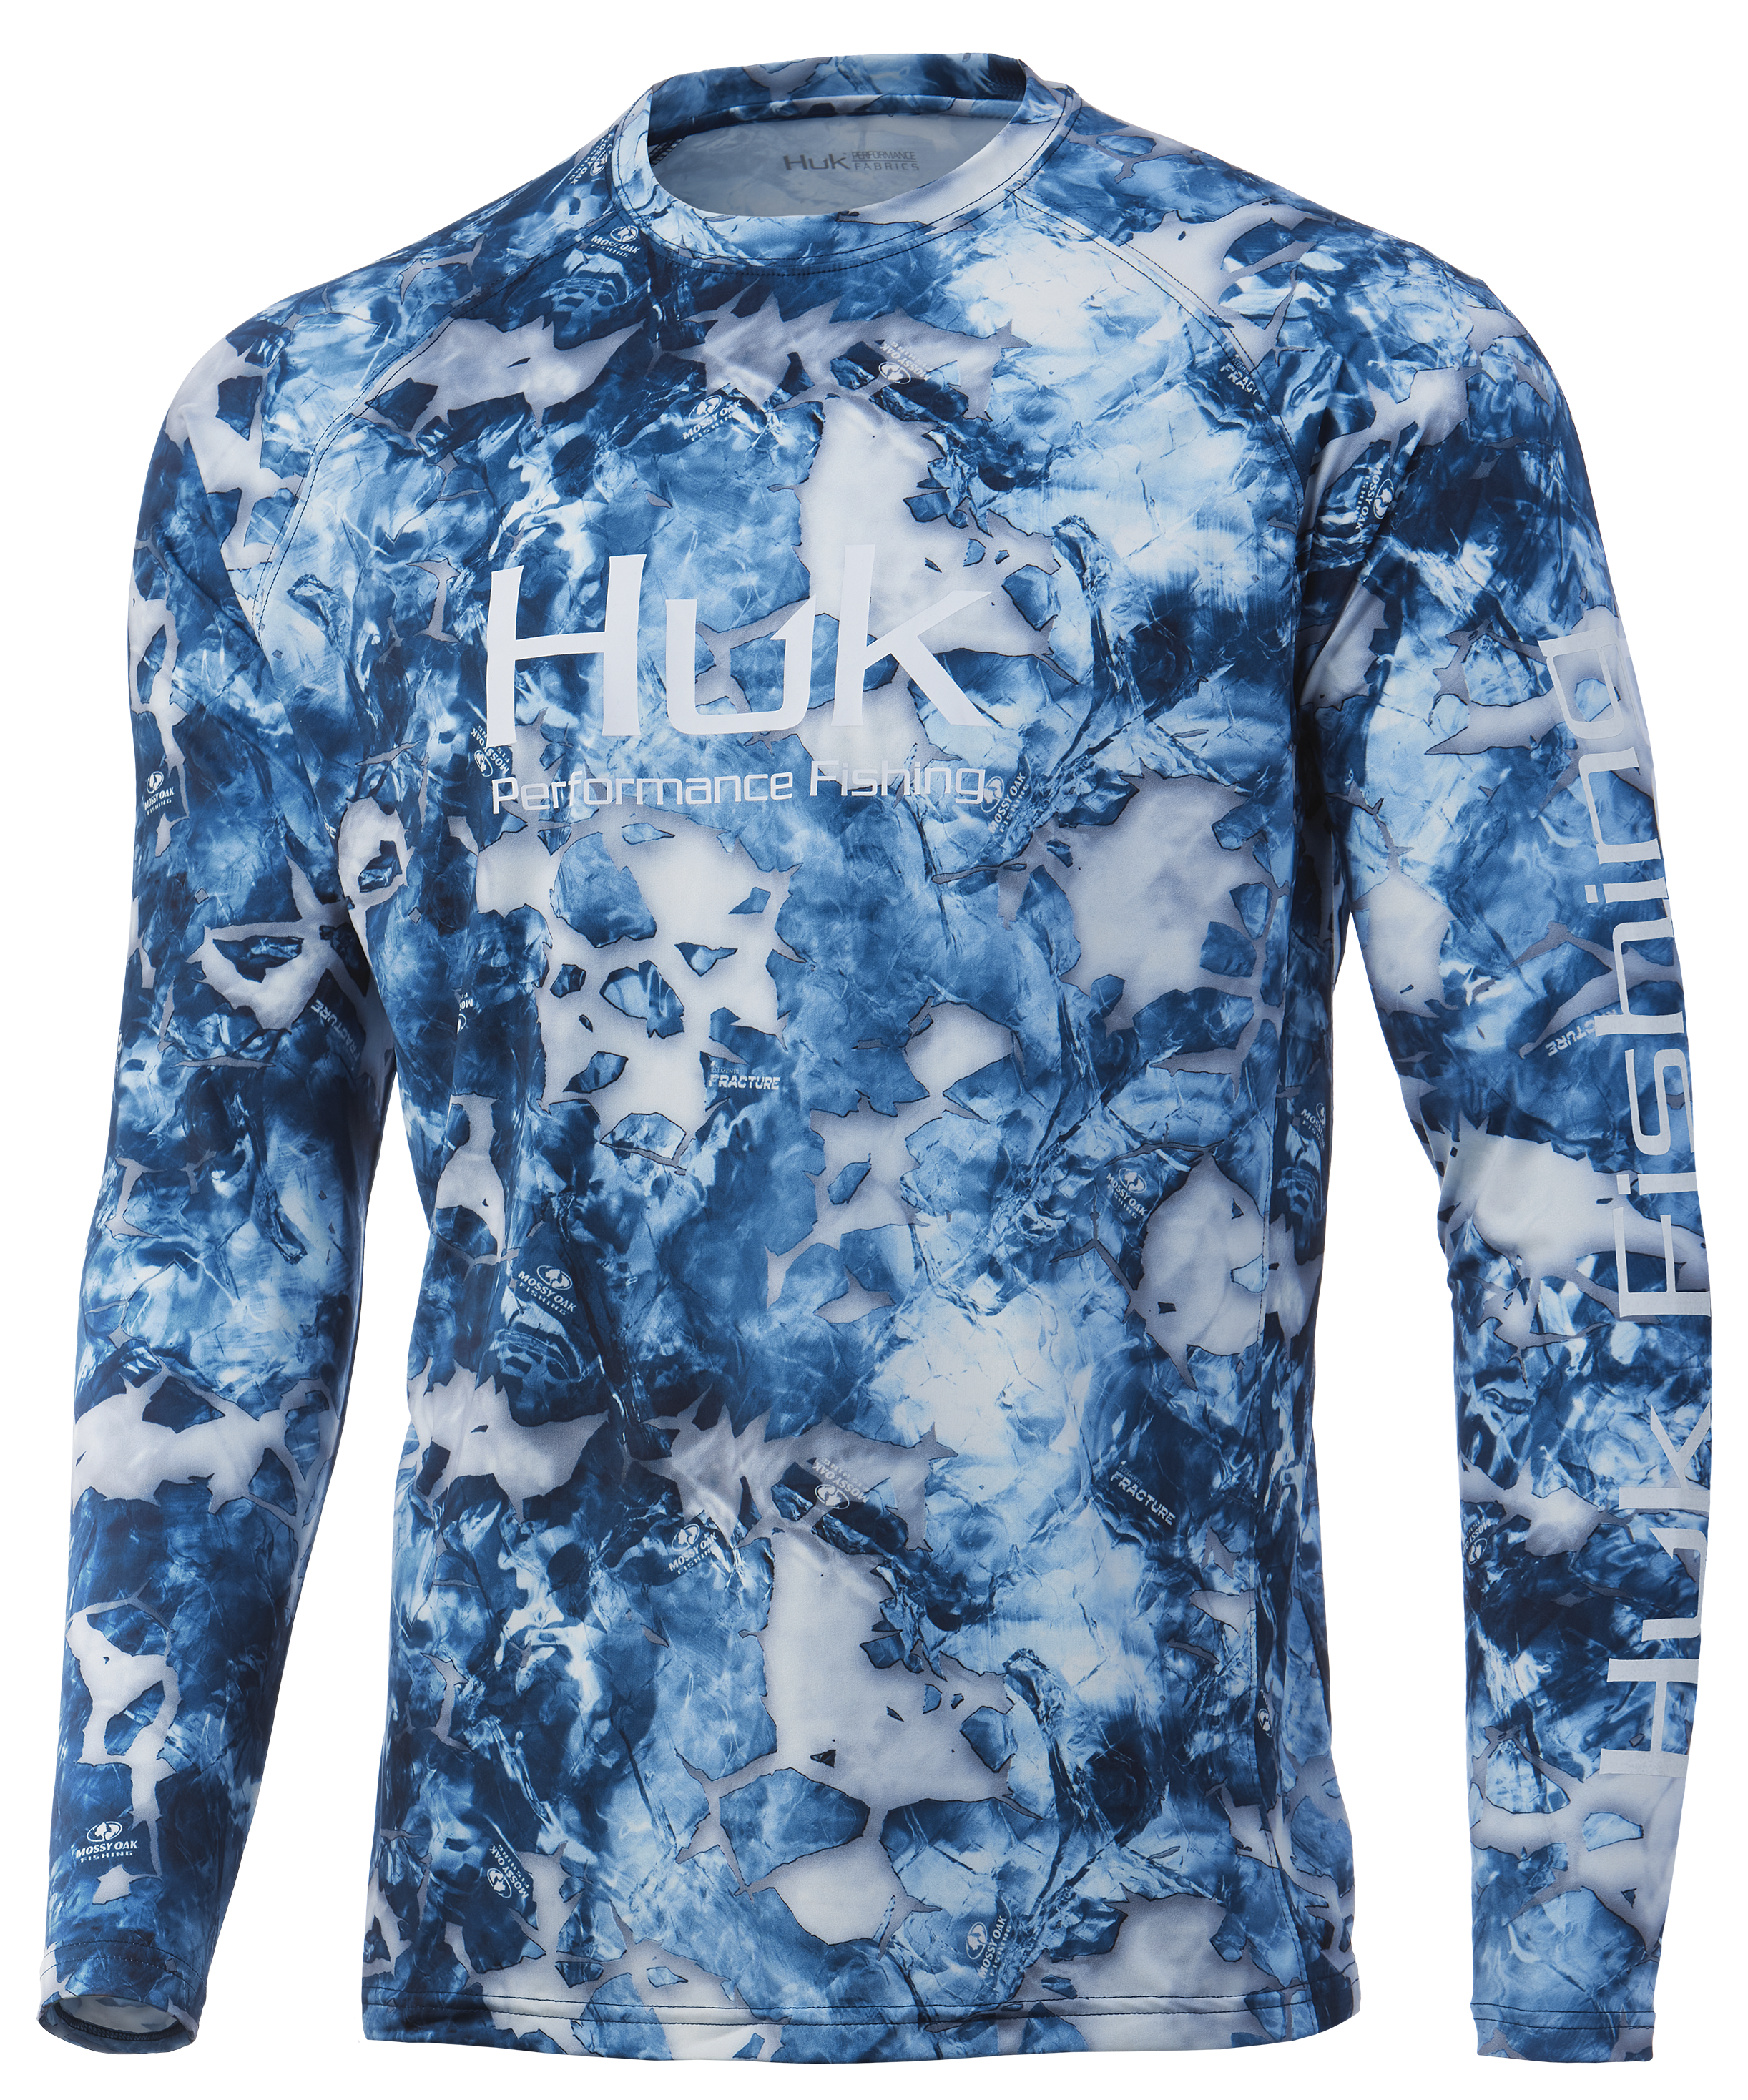 Huk Summer Men Fishing Hoodie Shirts Breathable Long Sleeve